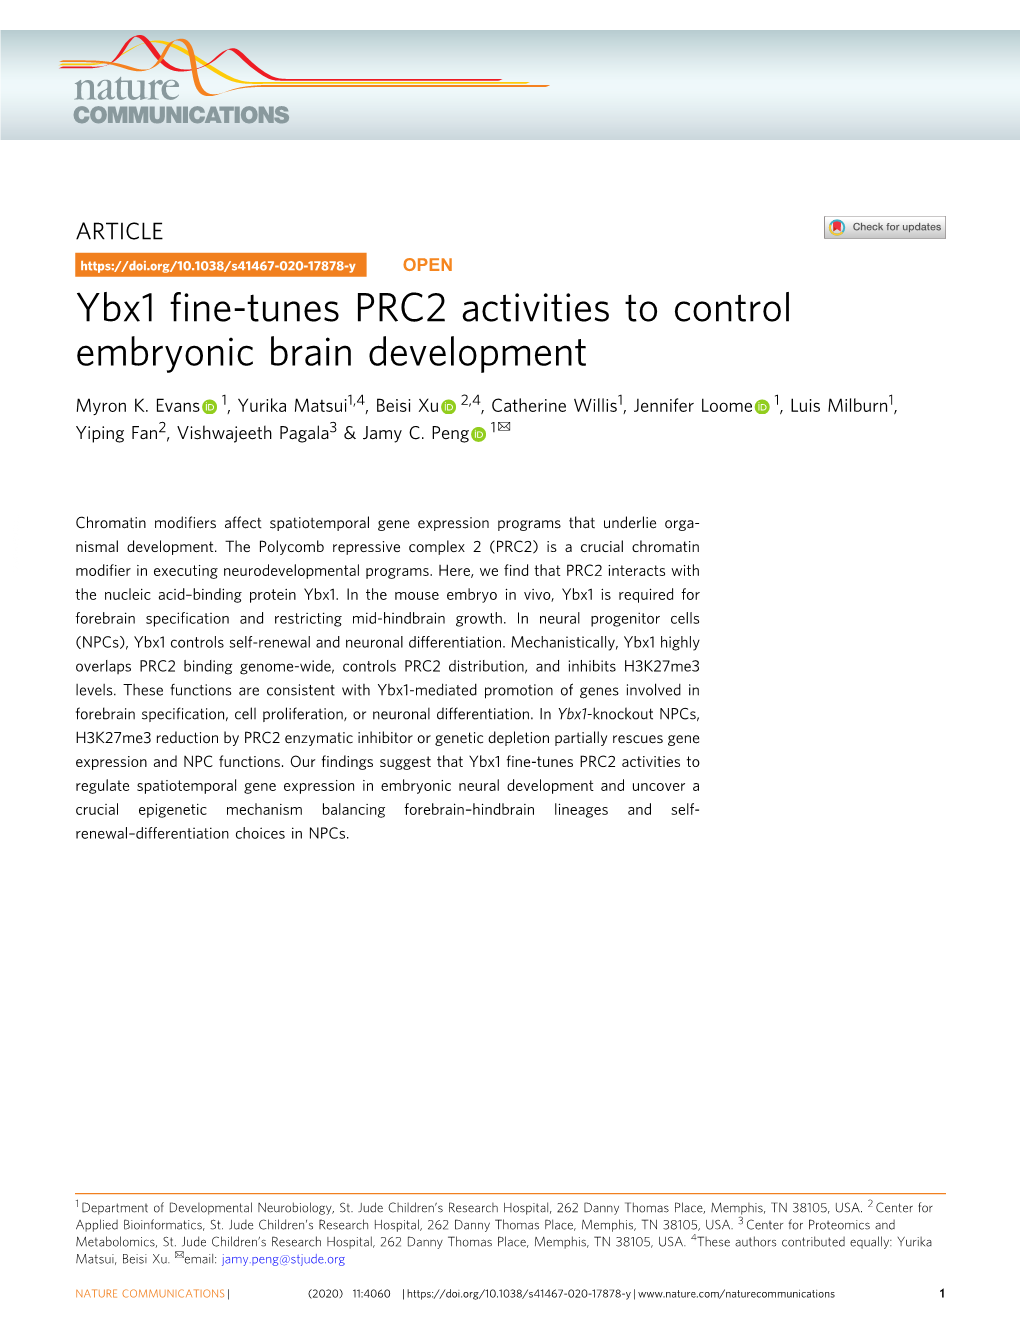 Ybx1 Fine-Tunes PRC2 Activities to Control Embryonic Brain Development